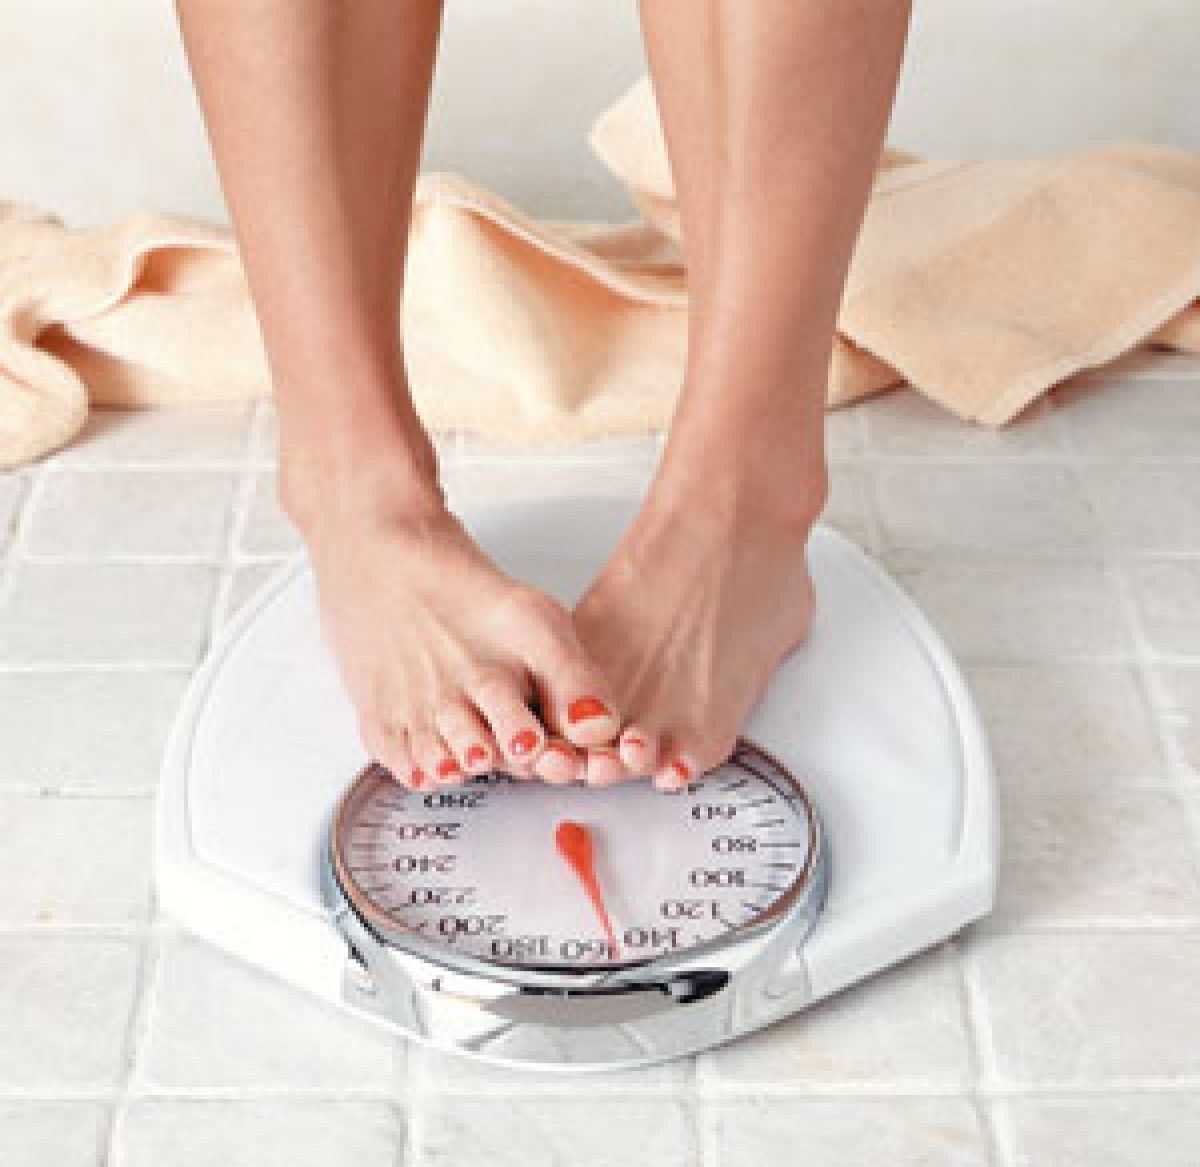 vreau sa slabesc 15 kg in 2 saptamani diete pt slabit sanatoase